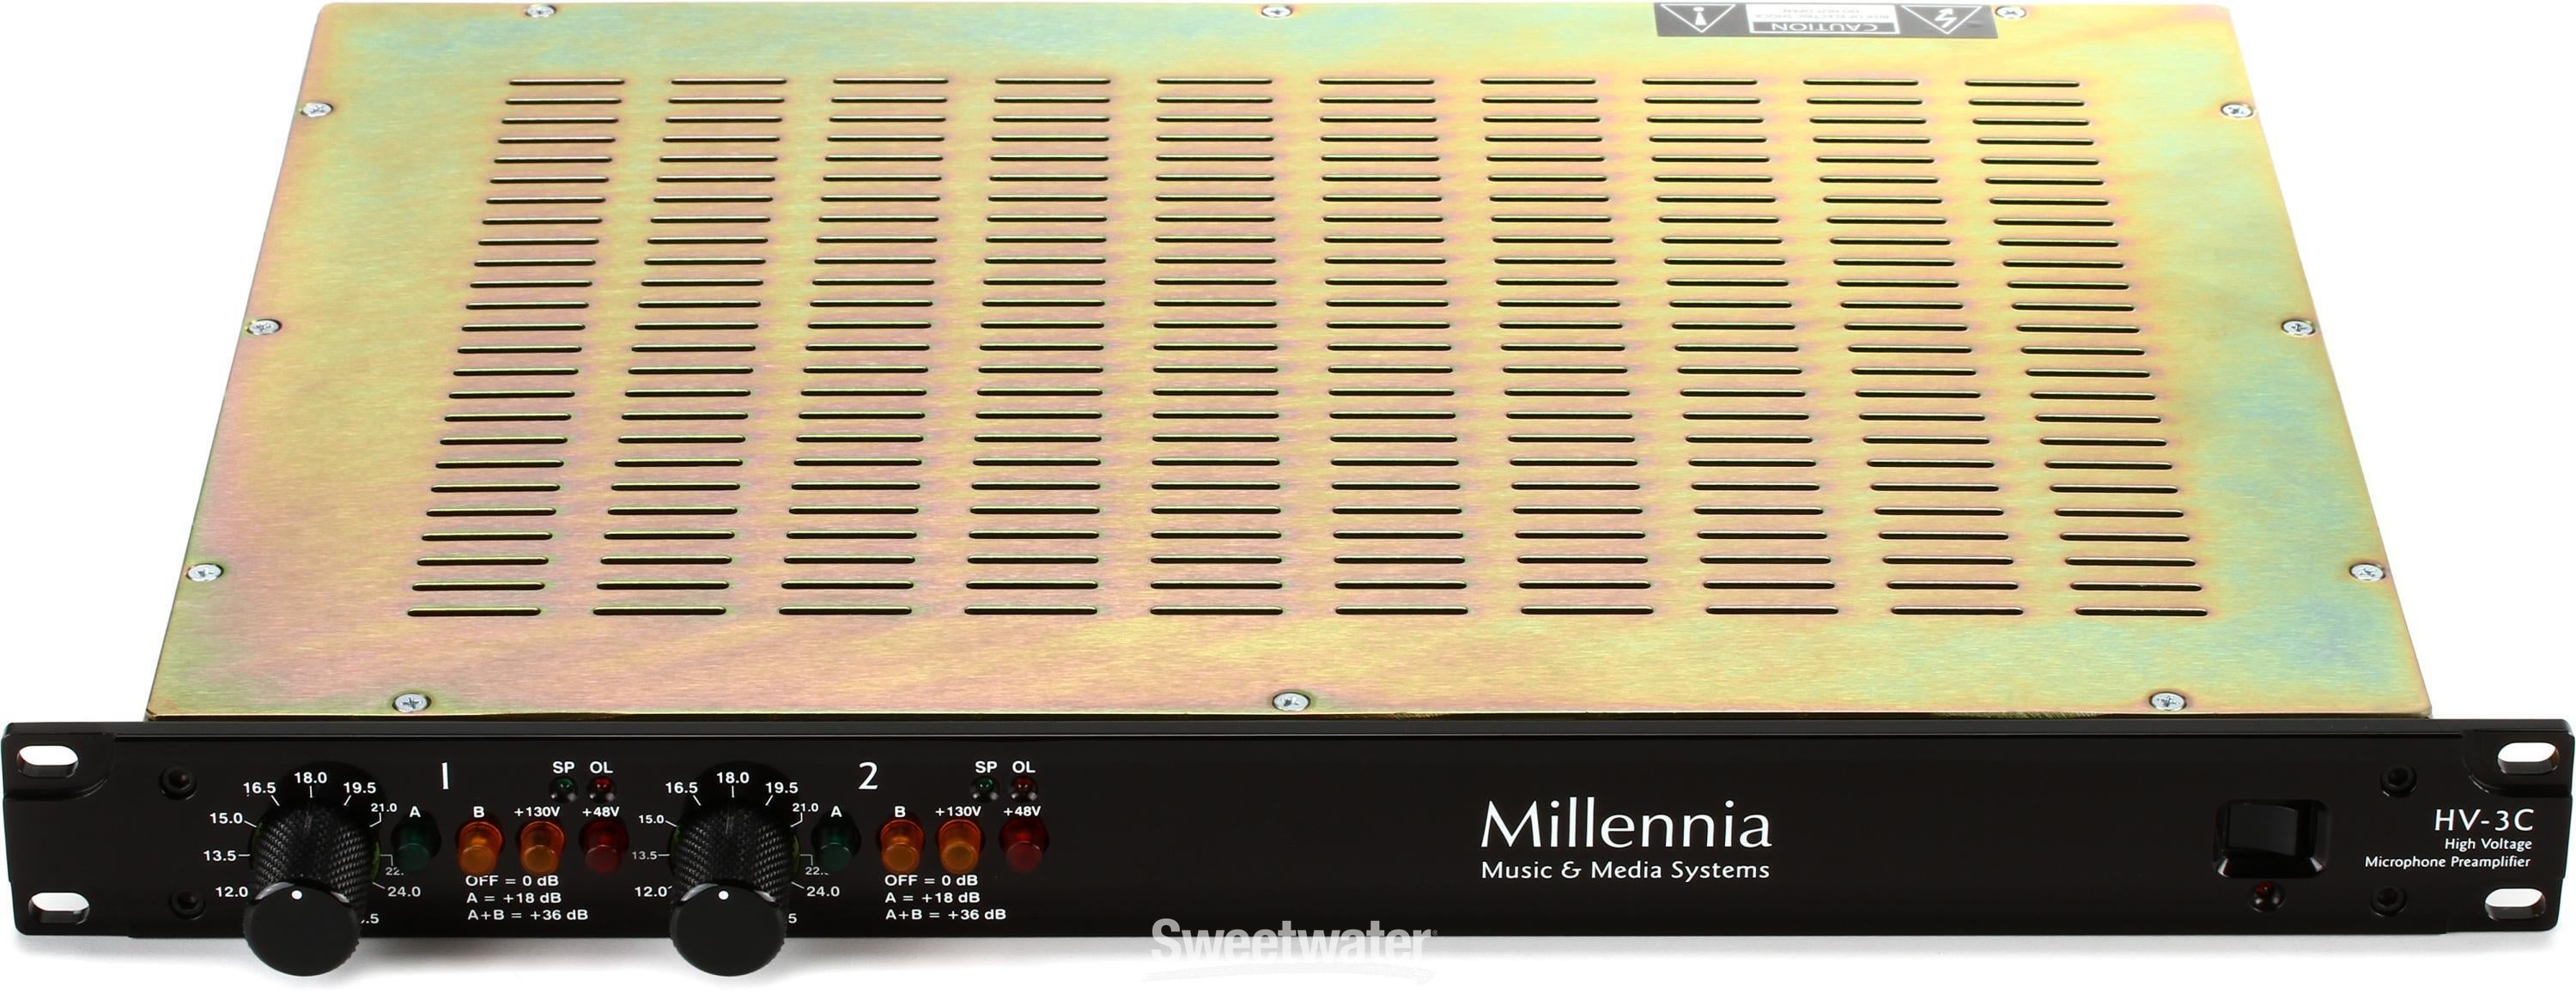 Millennia HV-3C 2-channel Microphone Preamp